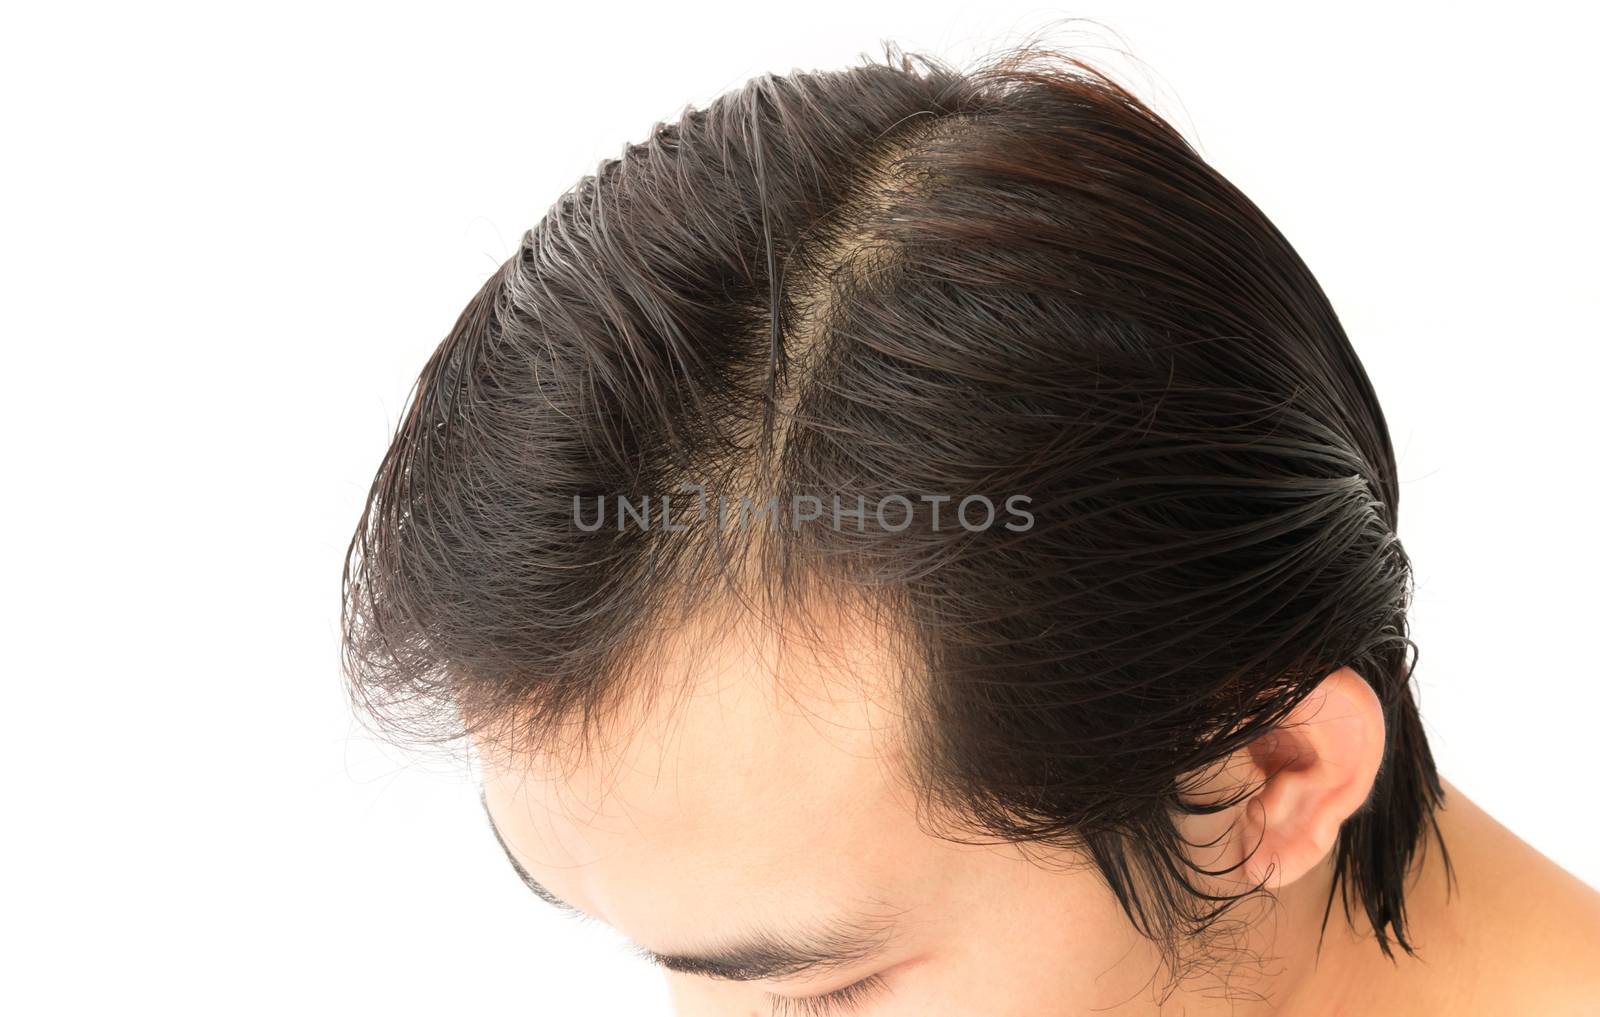 Young man serious hair loss problem for health care shampoo by pt.pongsak@gmail.com